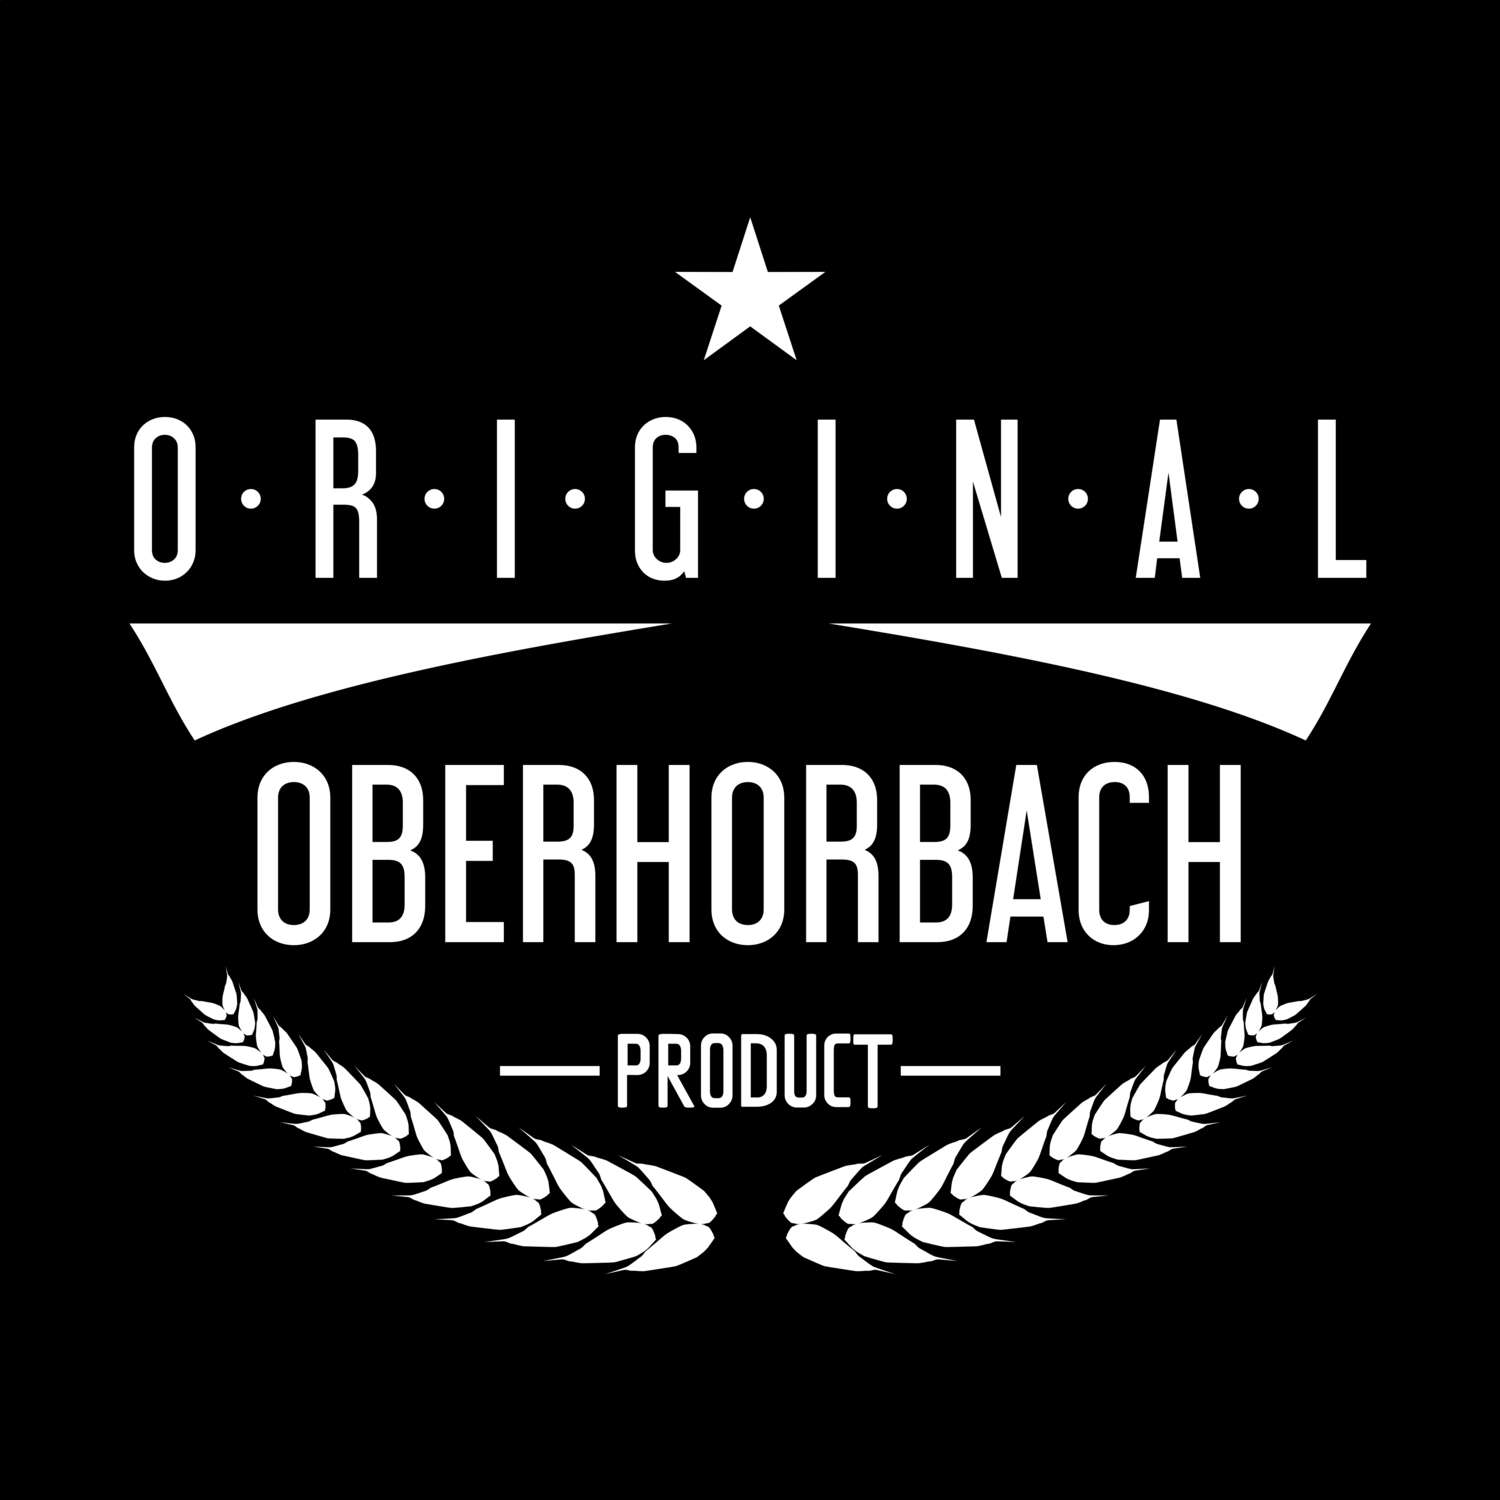 Oberhorbach T-Shirt »Original Product«